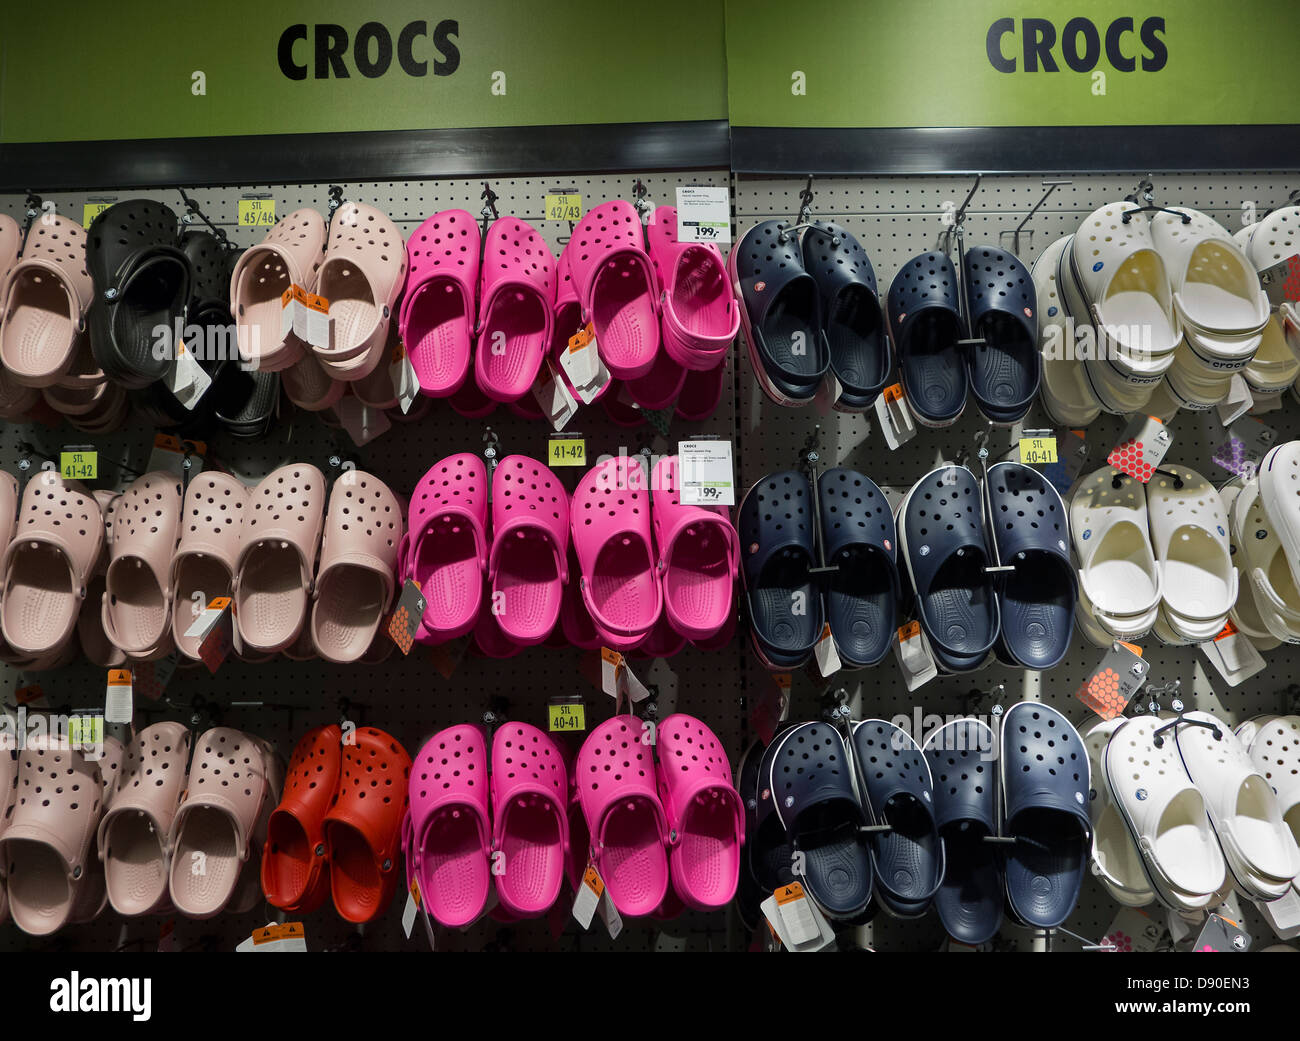 crocs shoe stores